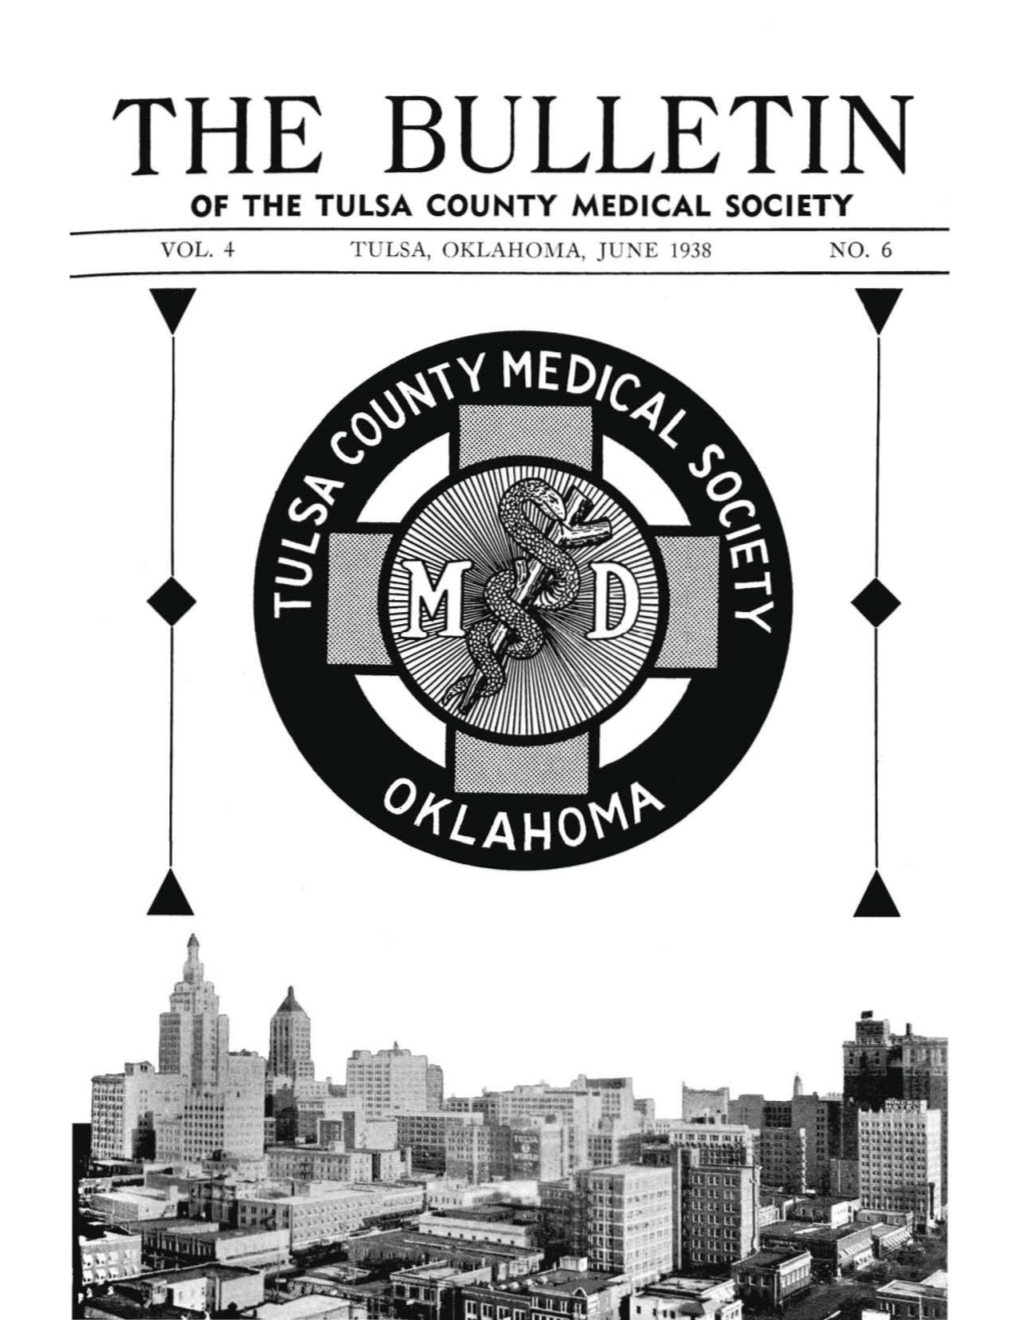 The Bulletin of the Tulsa County Medical Society Vol